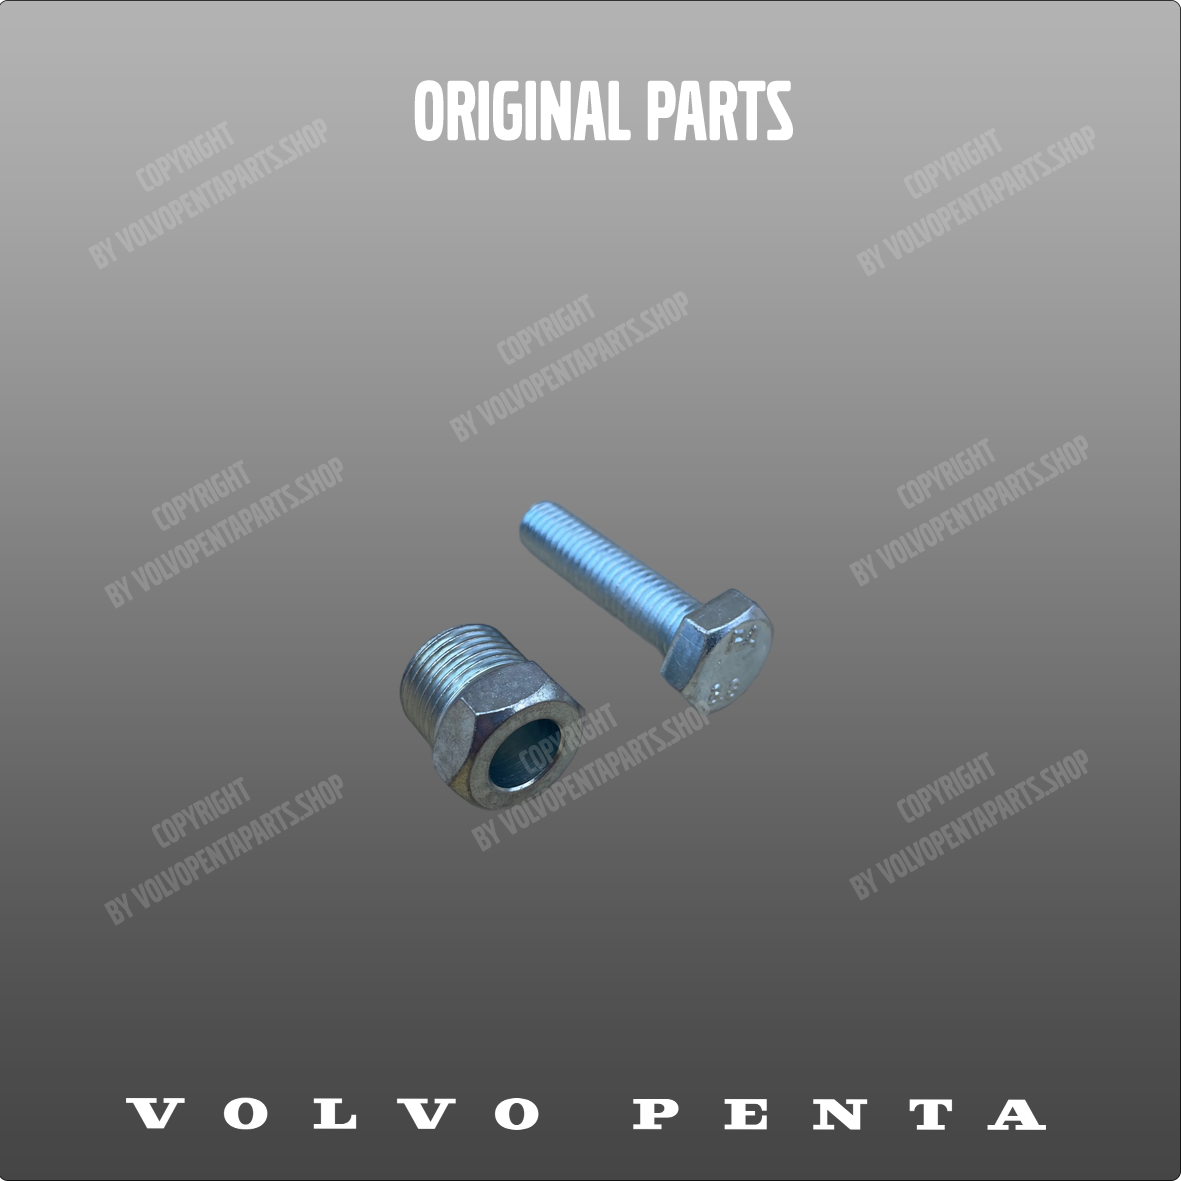 Volvo Penta puller screw 3843948